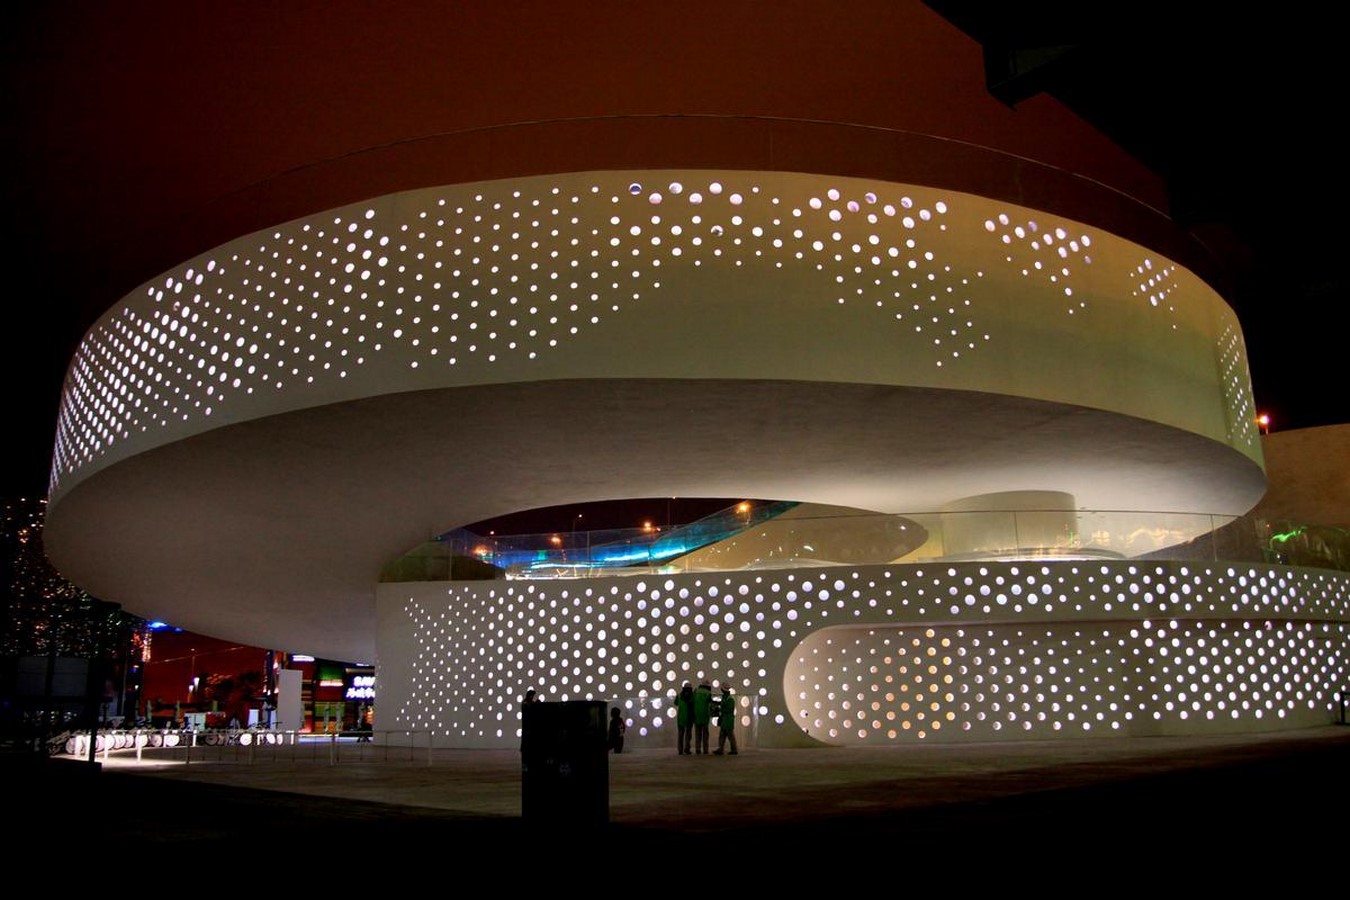 Denmark Pavilion for Shanghai Expo 2010 by BIG: An Architectural Fairytale - Sheet4